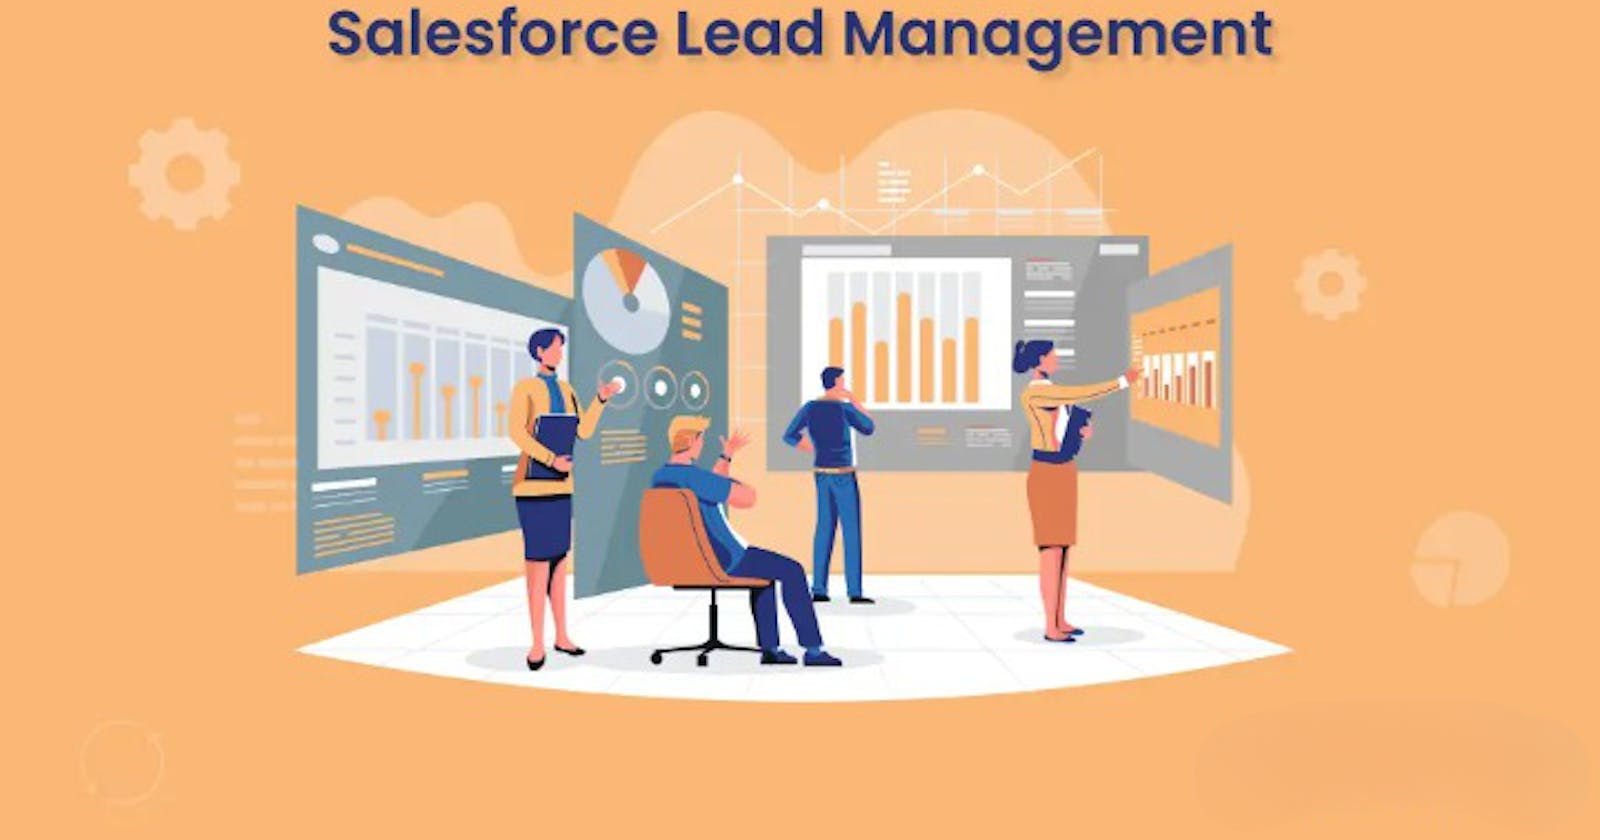 Salesforce Lead Management: Strategies for Effective Lead Generation